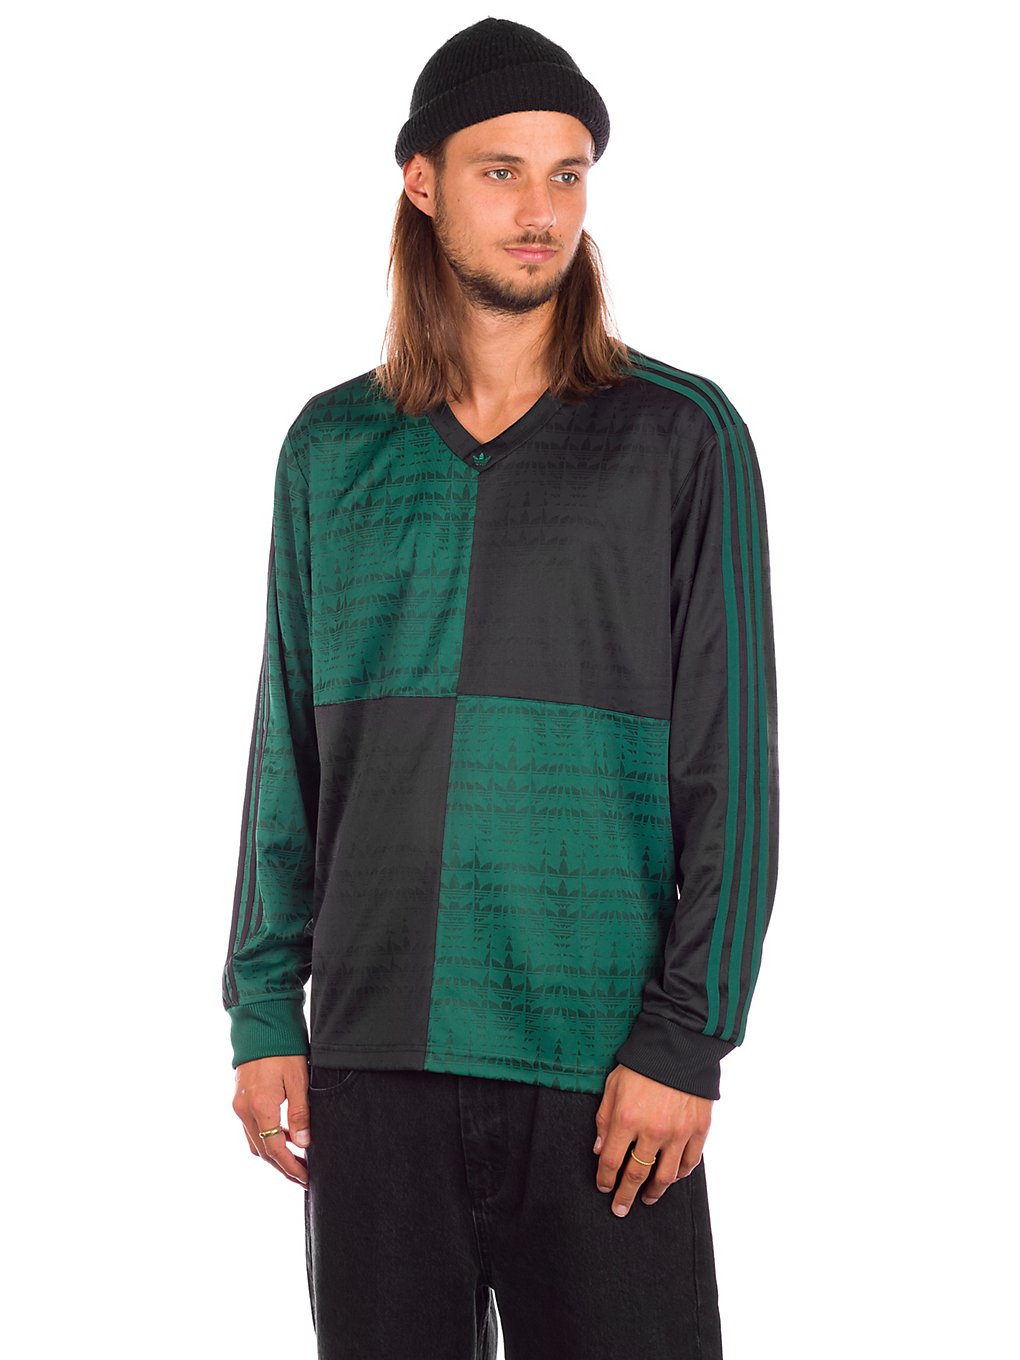 adidas Skateboarding Checker Jersey Long Sleeve T-Shirt black